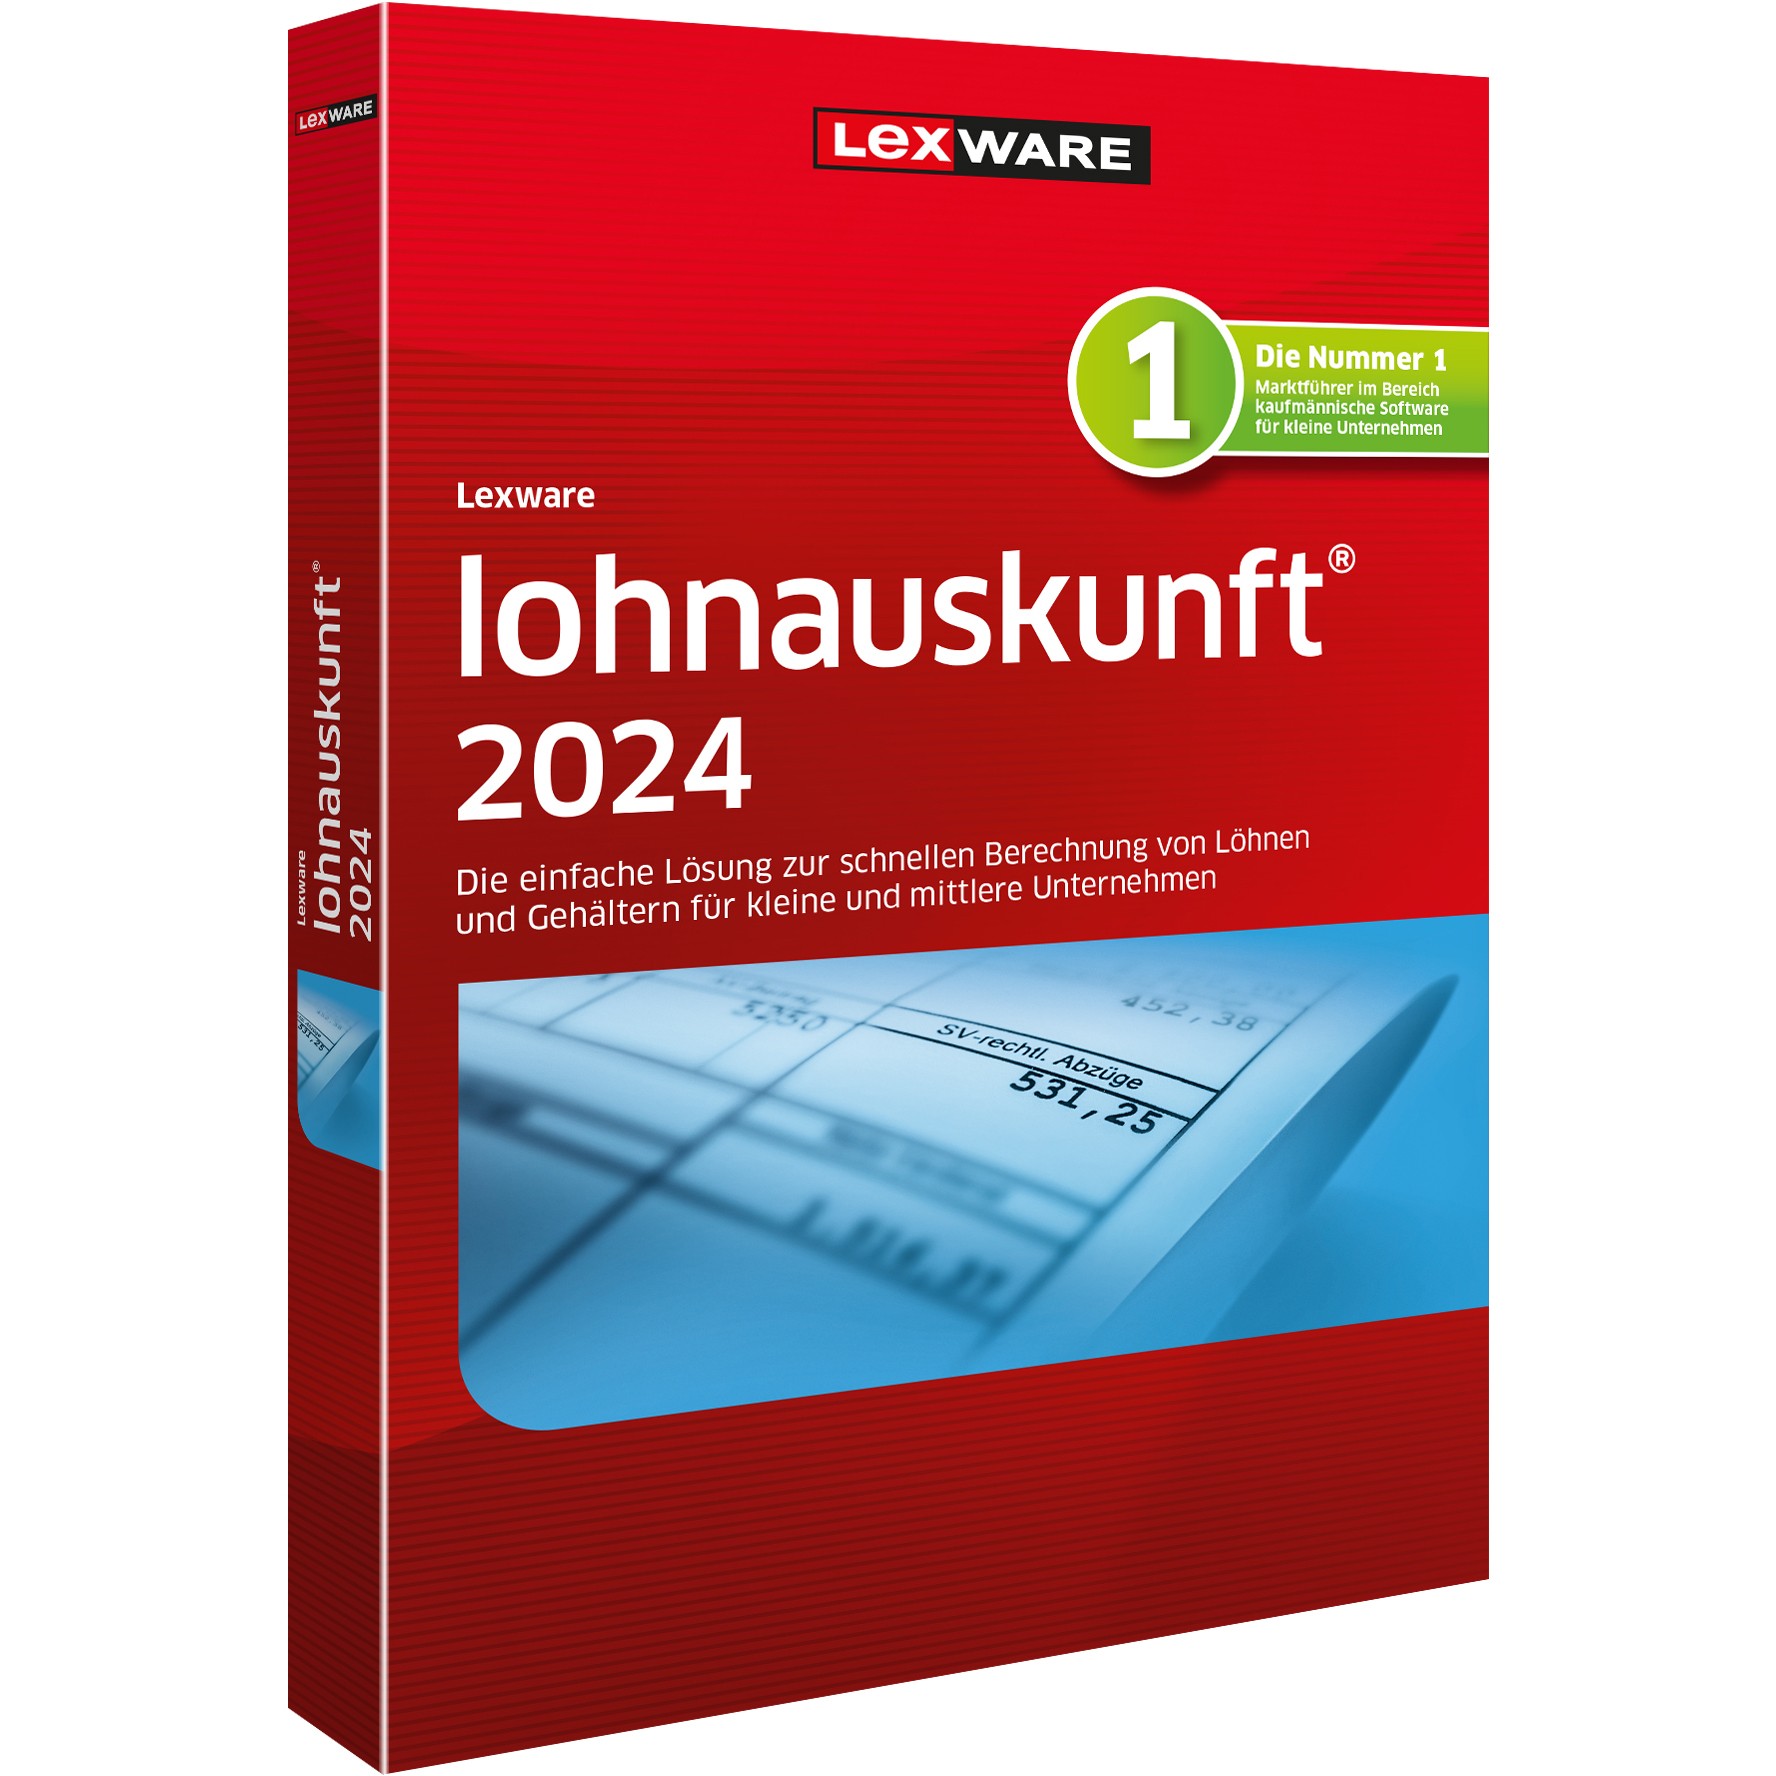 Lexware Lohnauskunft 2024 - 1 Devise. ABO - ESD -DownloadESD - 08846-2035